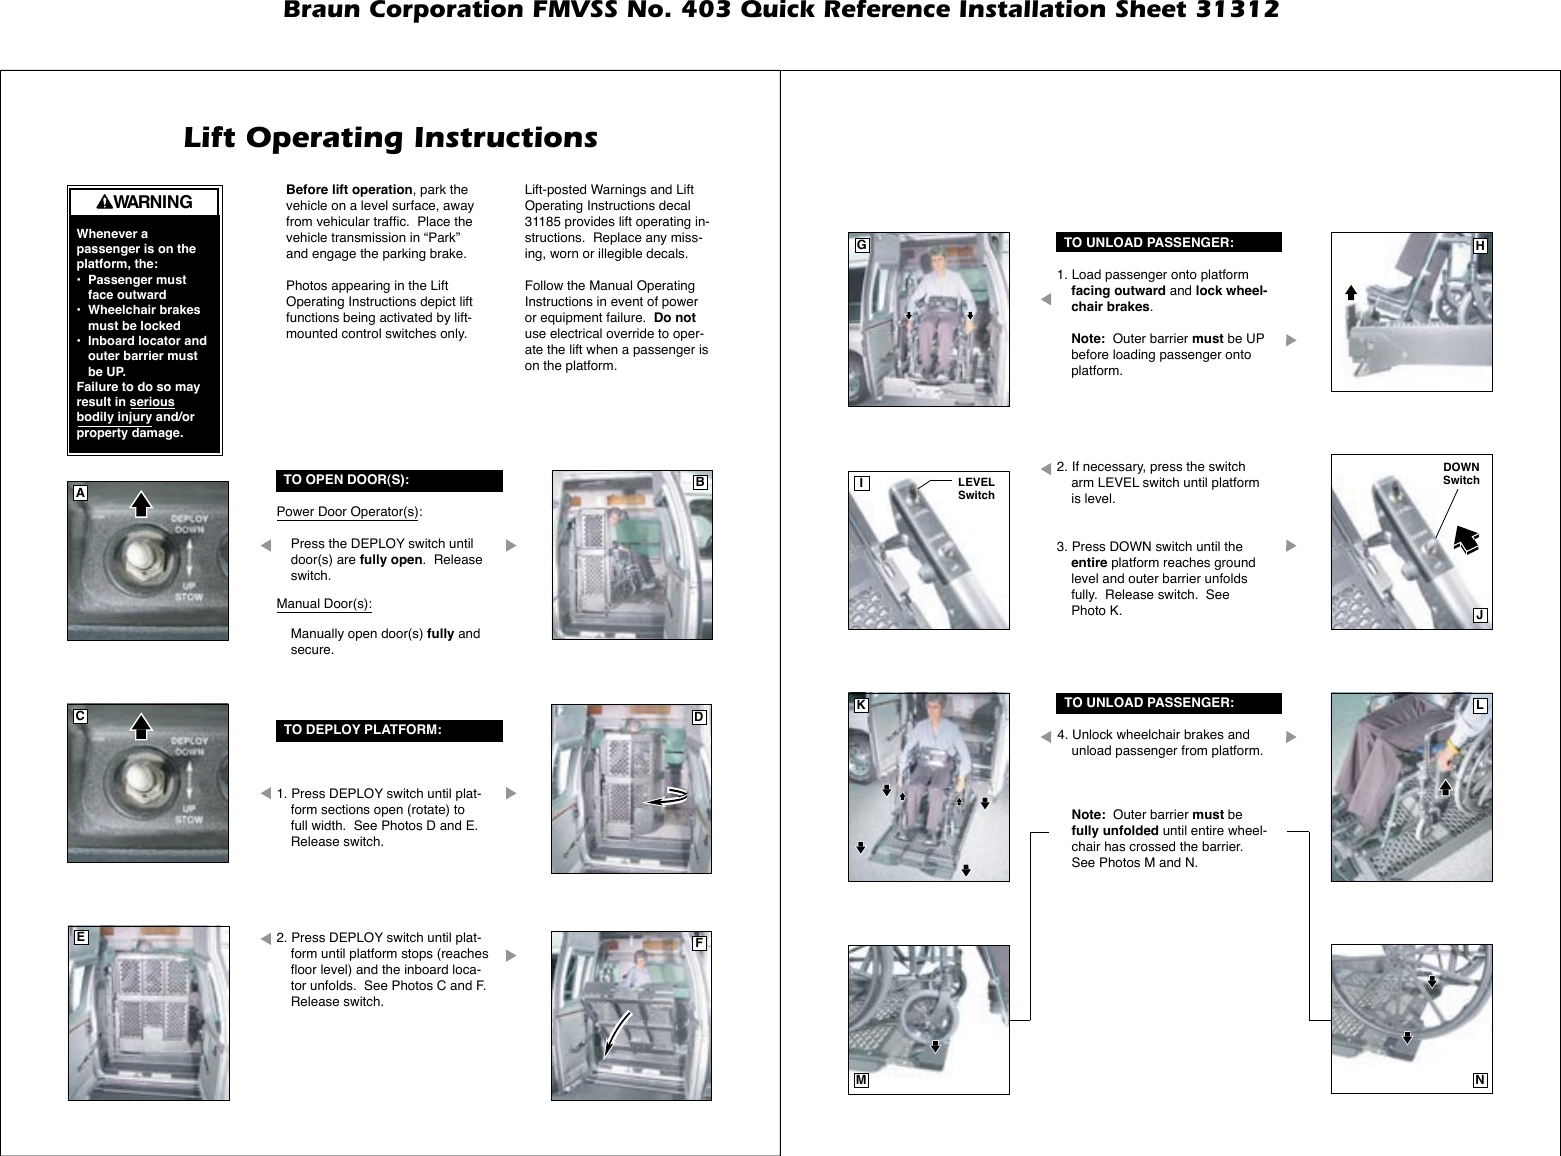 Page 5 of 8 - Braun Braun-Corporation-Fmvss-No-403-403-Users-Manual-  Braun-corporation-fmvss-no-403-403-users-manual